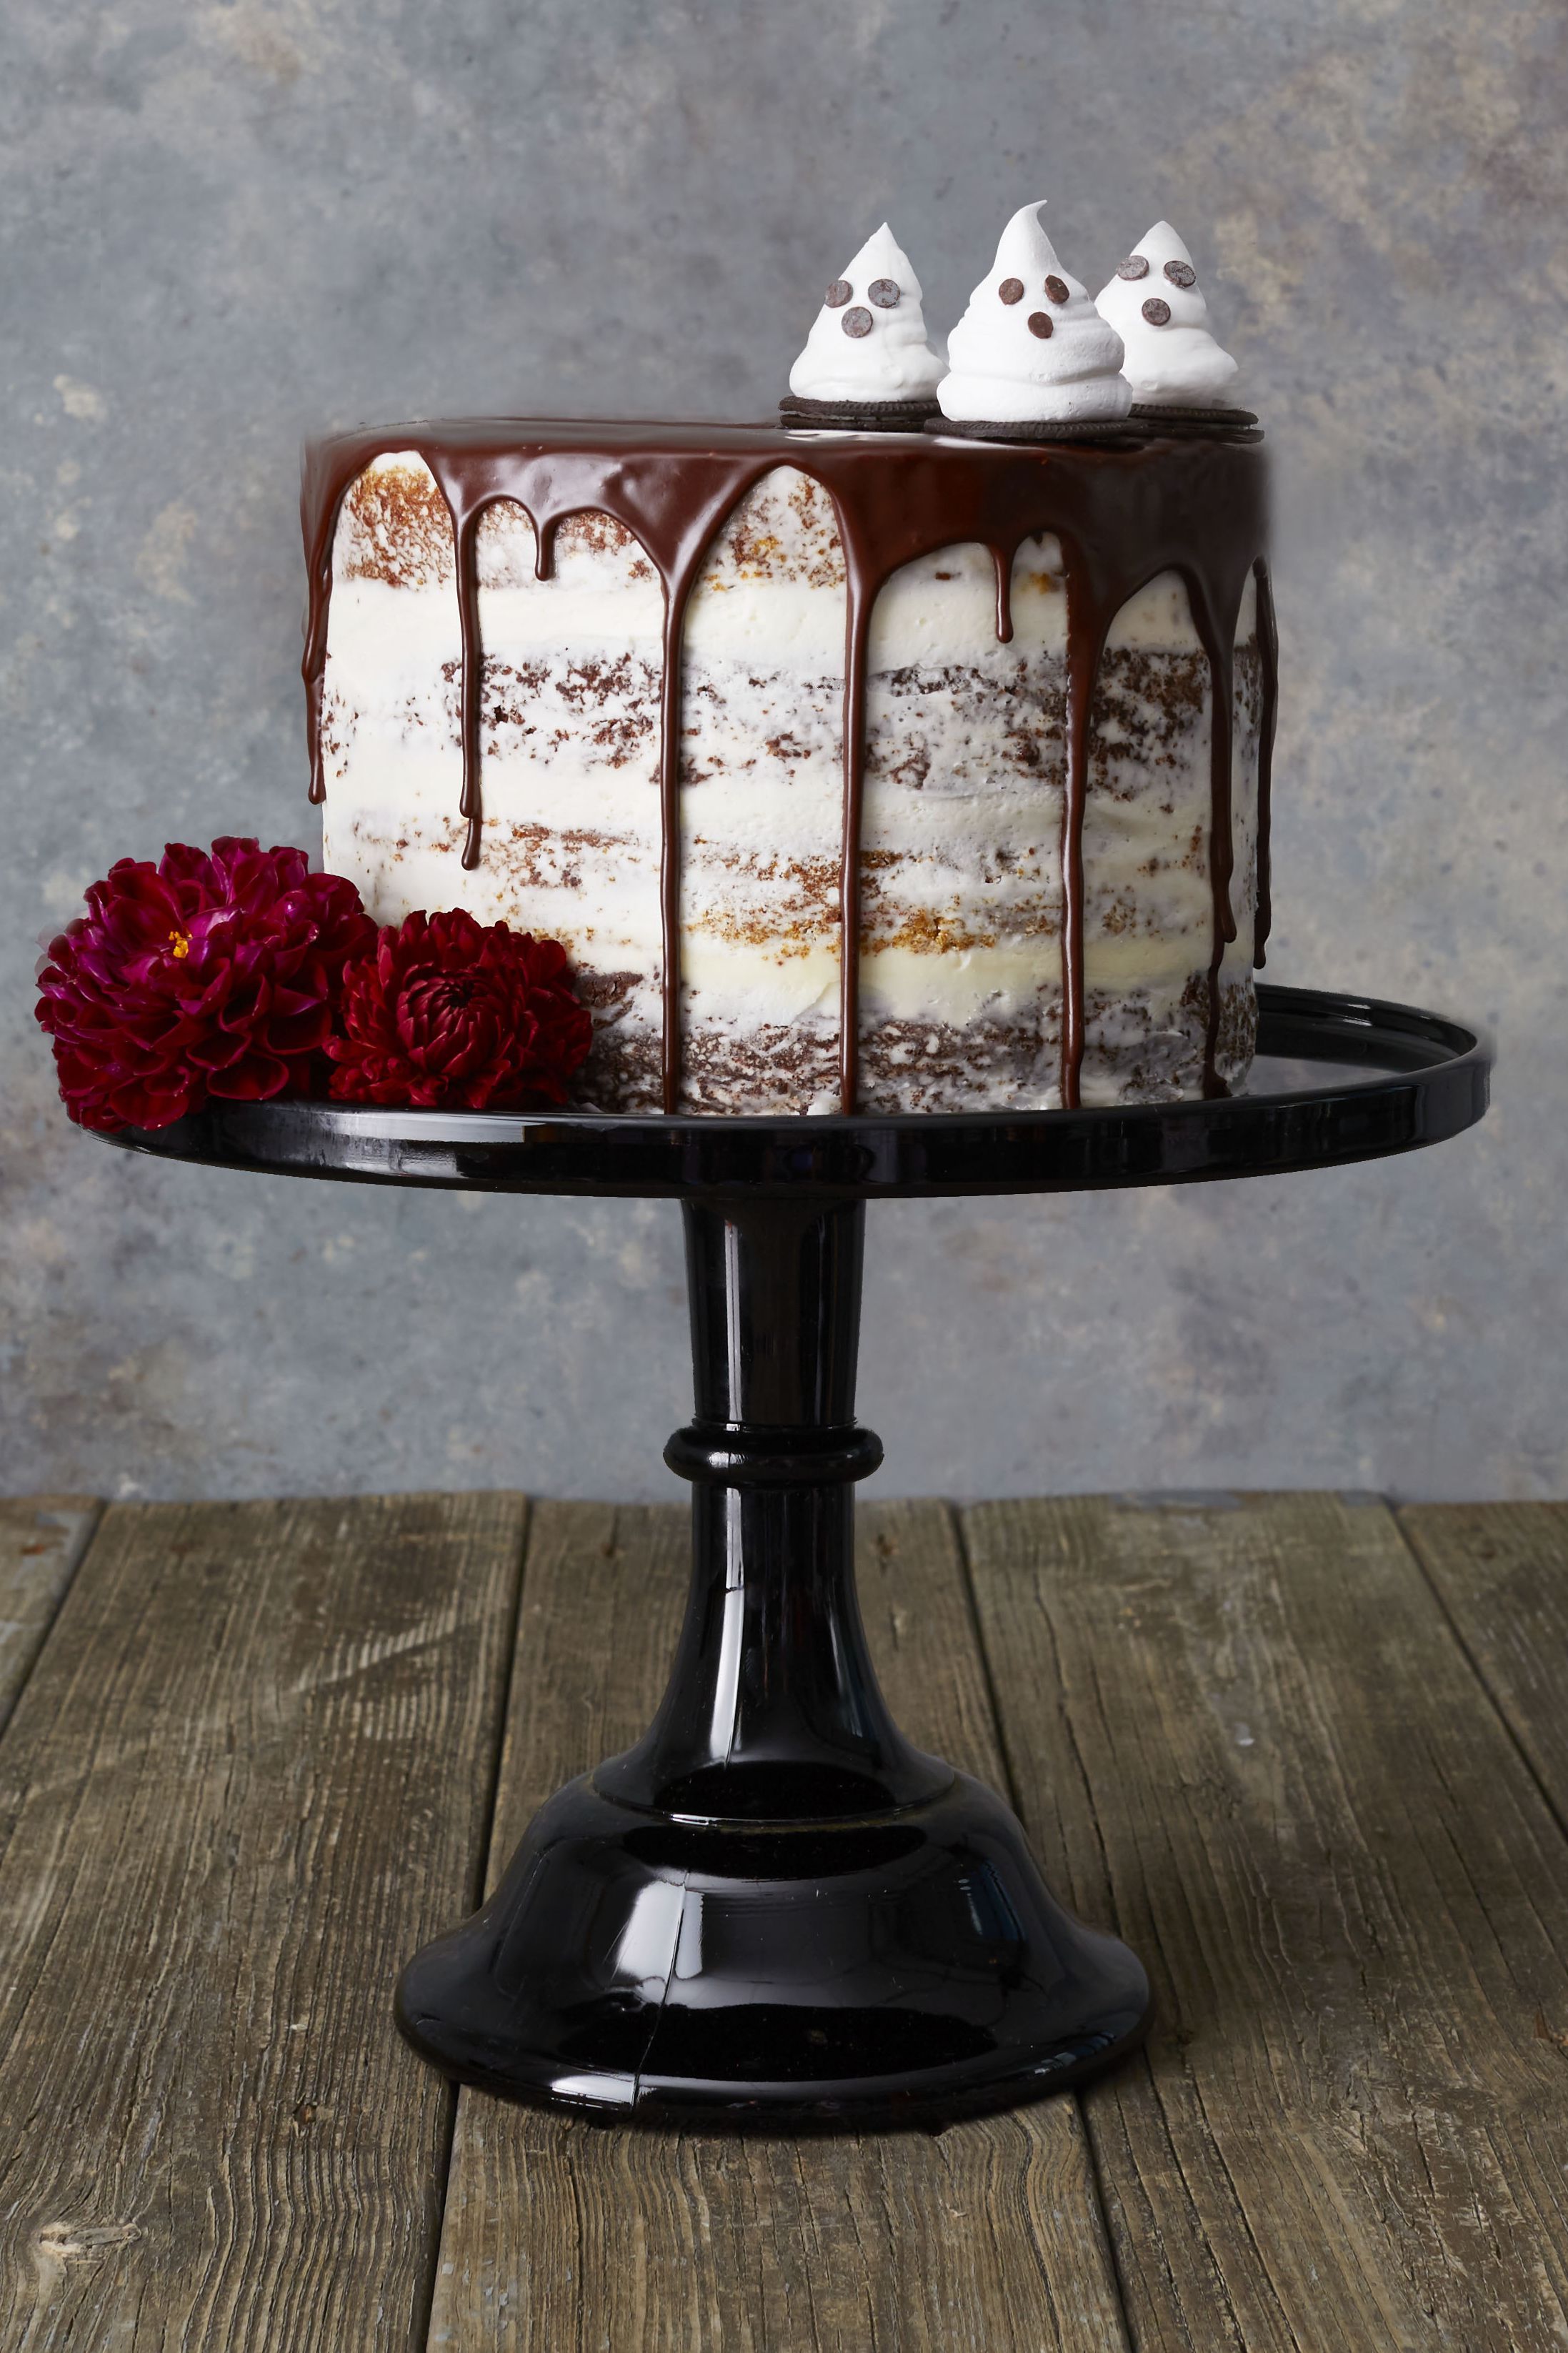 Halloween Chocolate Cake with Macarons ⋆ Sugar, Spice and Glitter